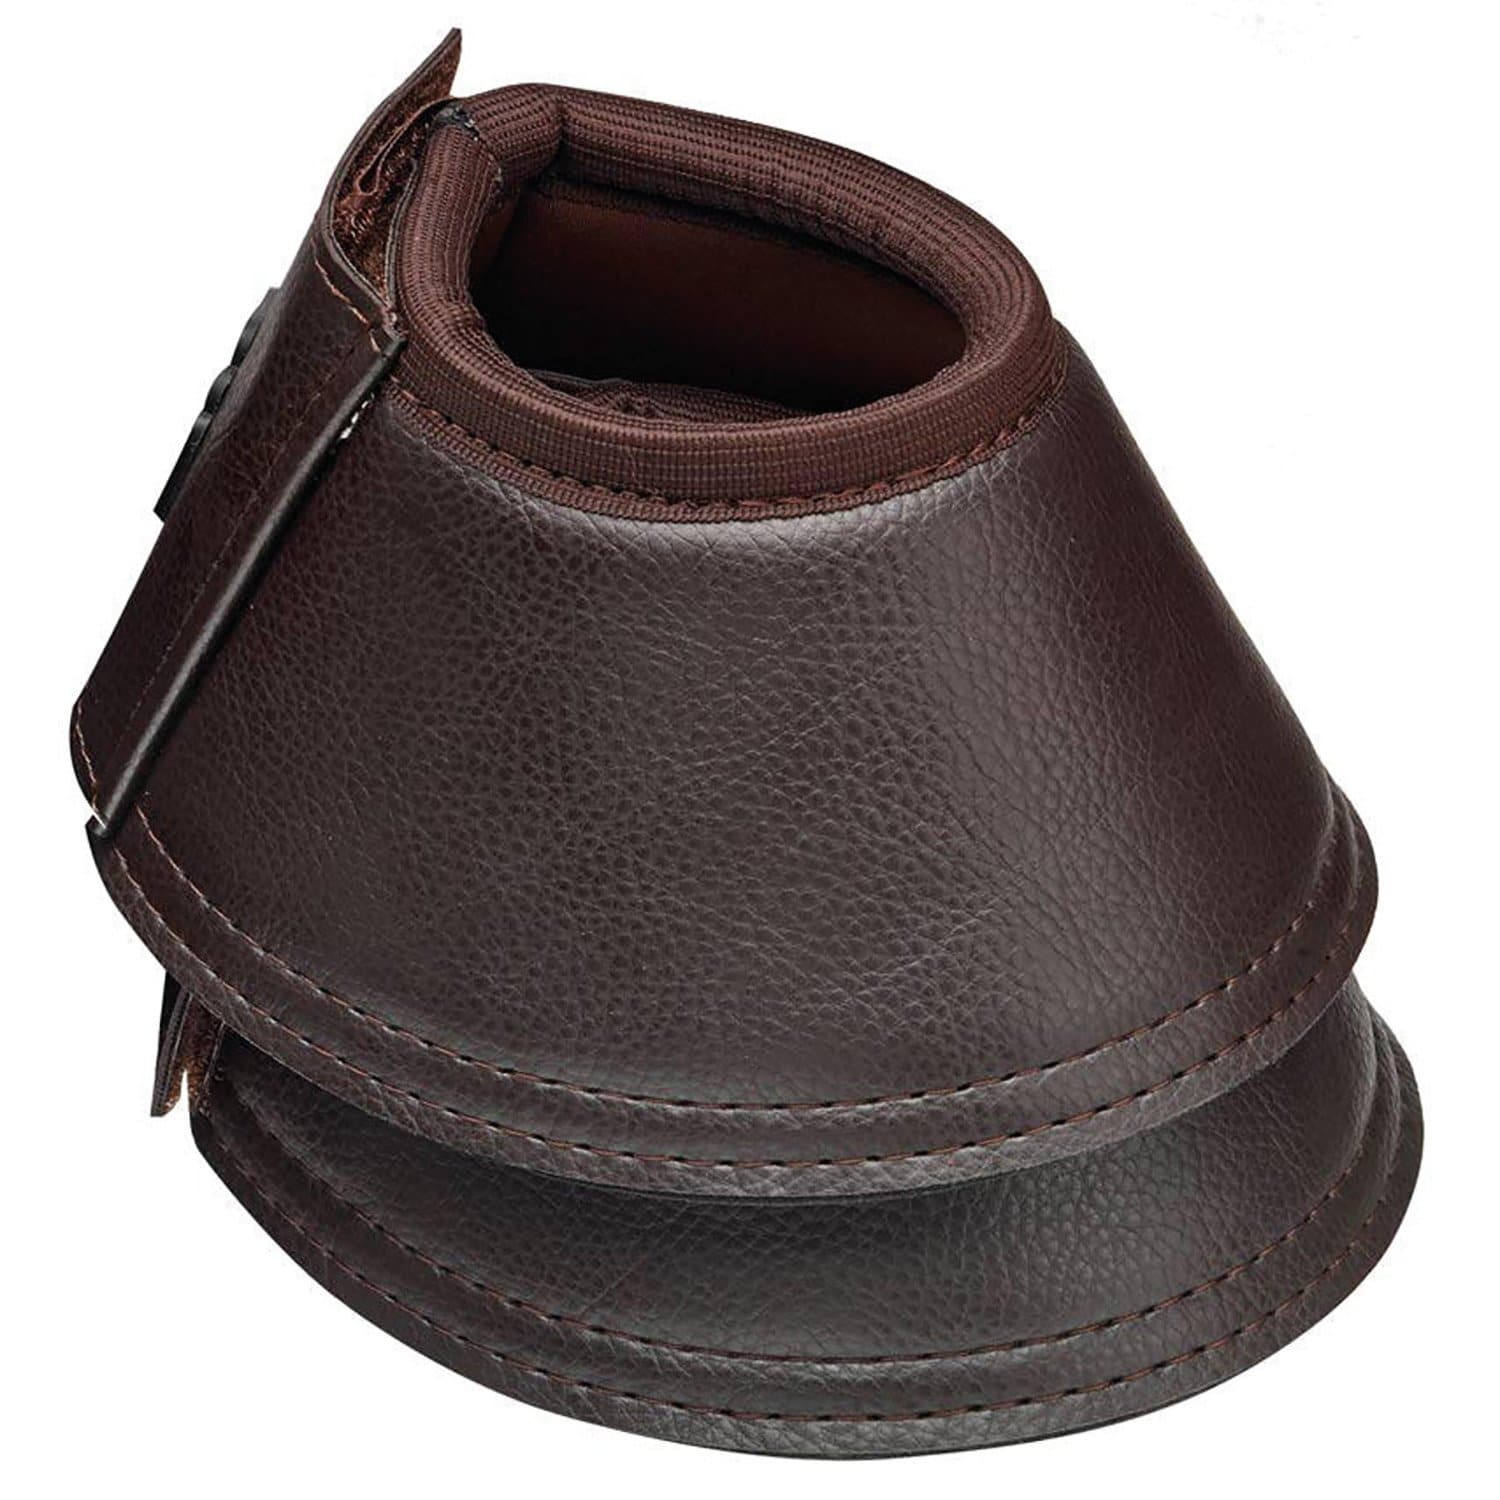 Masta  Over Reach Boots  Leather Look Neoprene